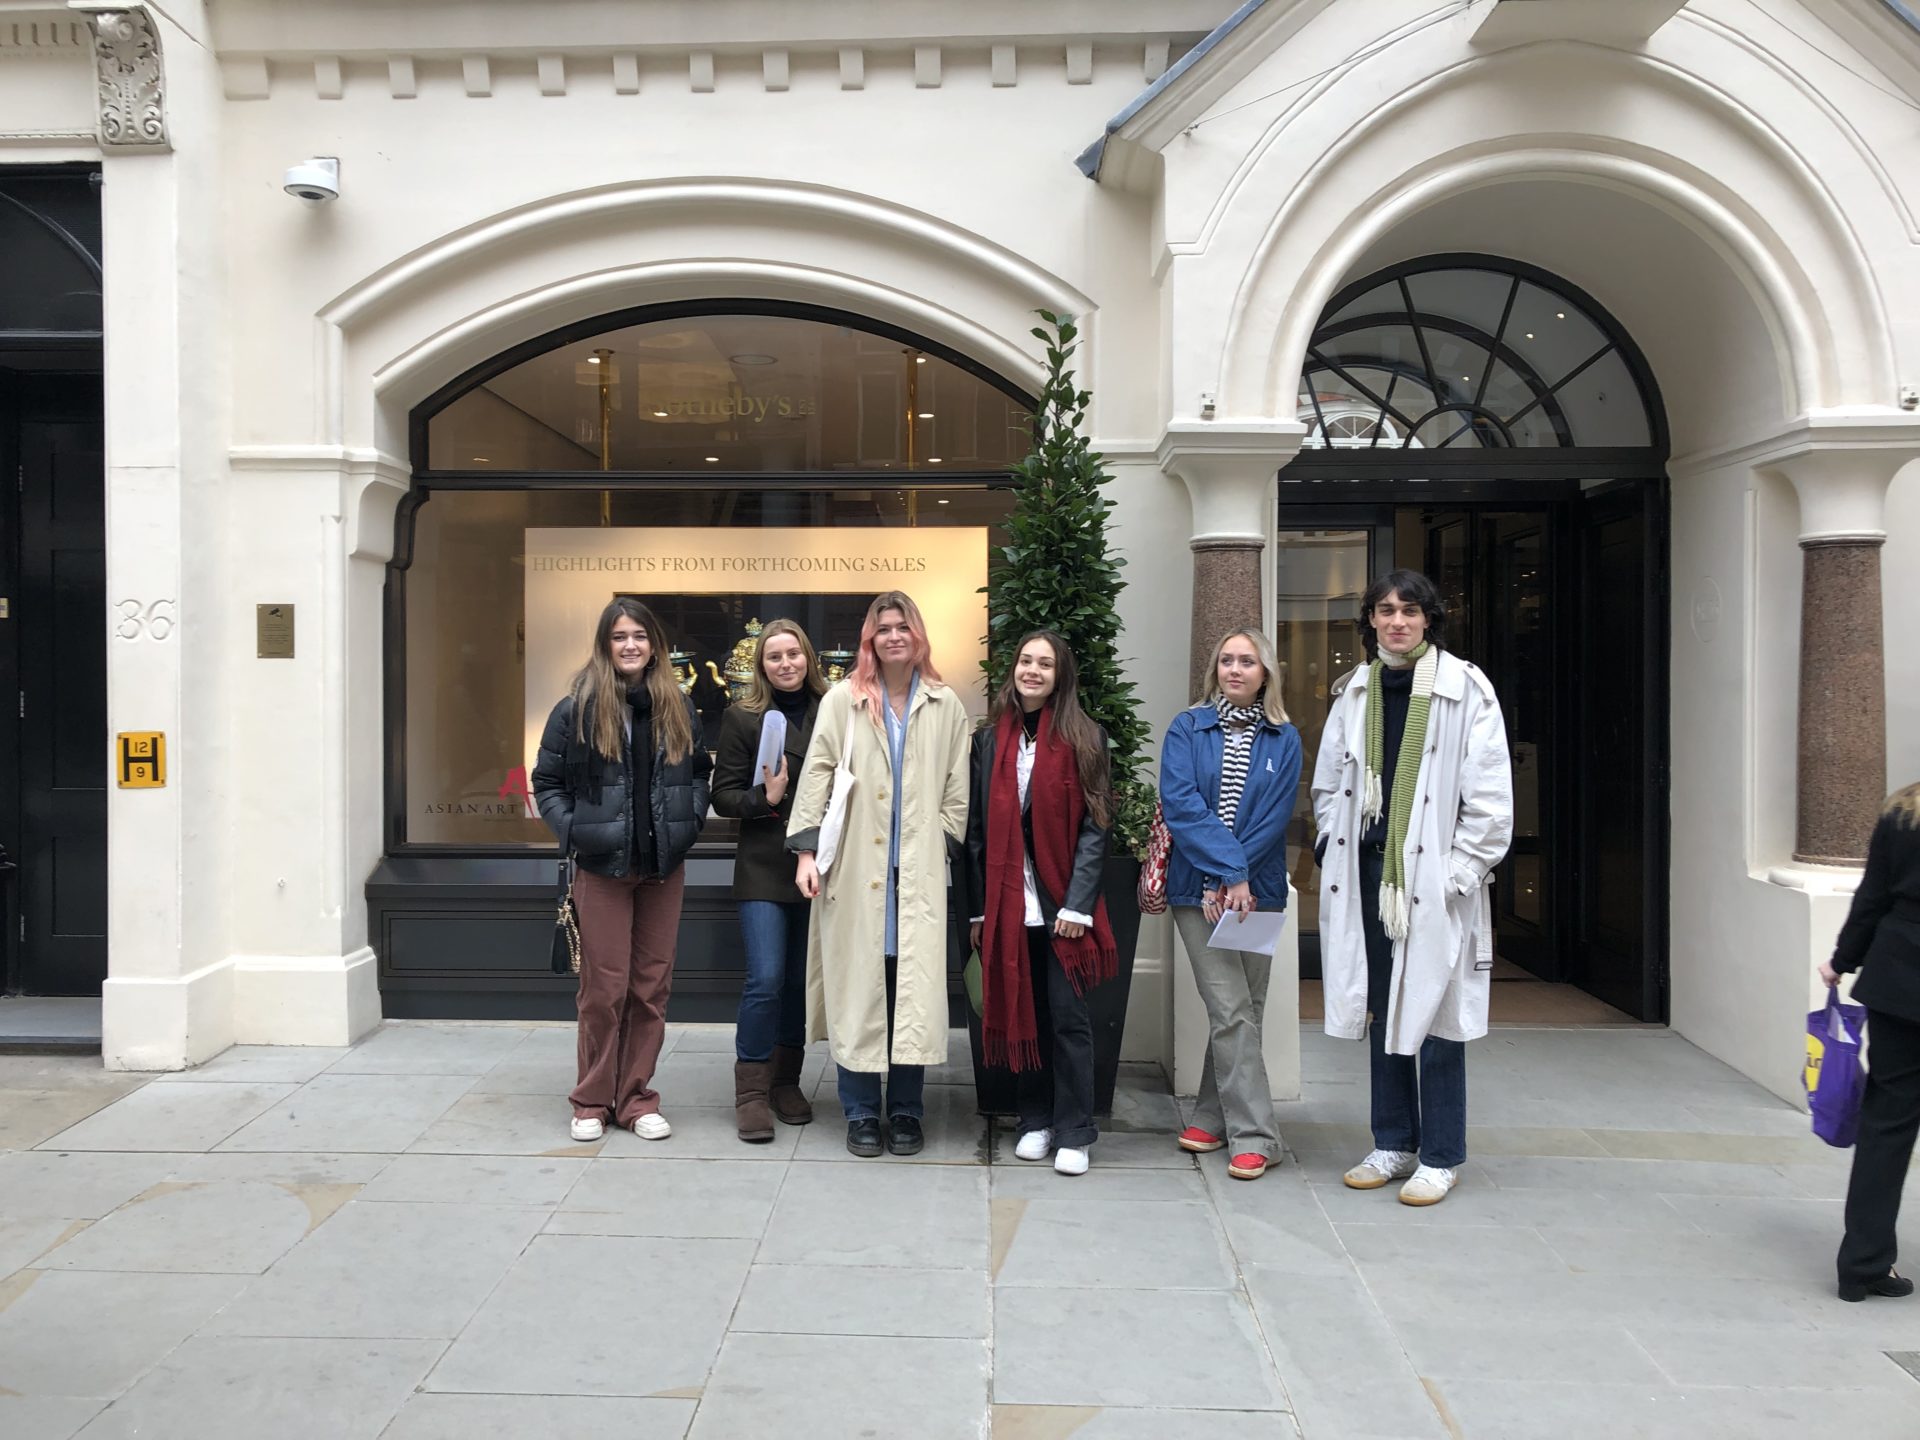 Art Market students field trip to London